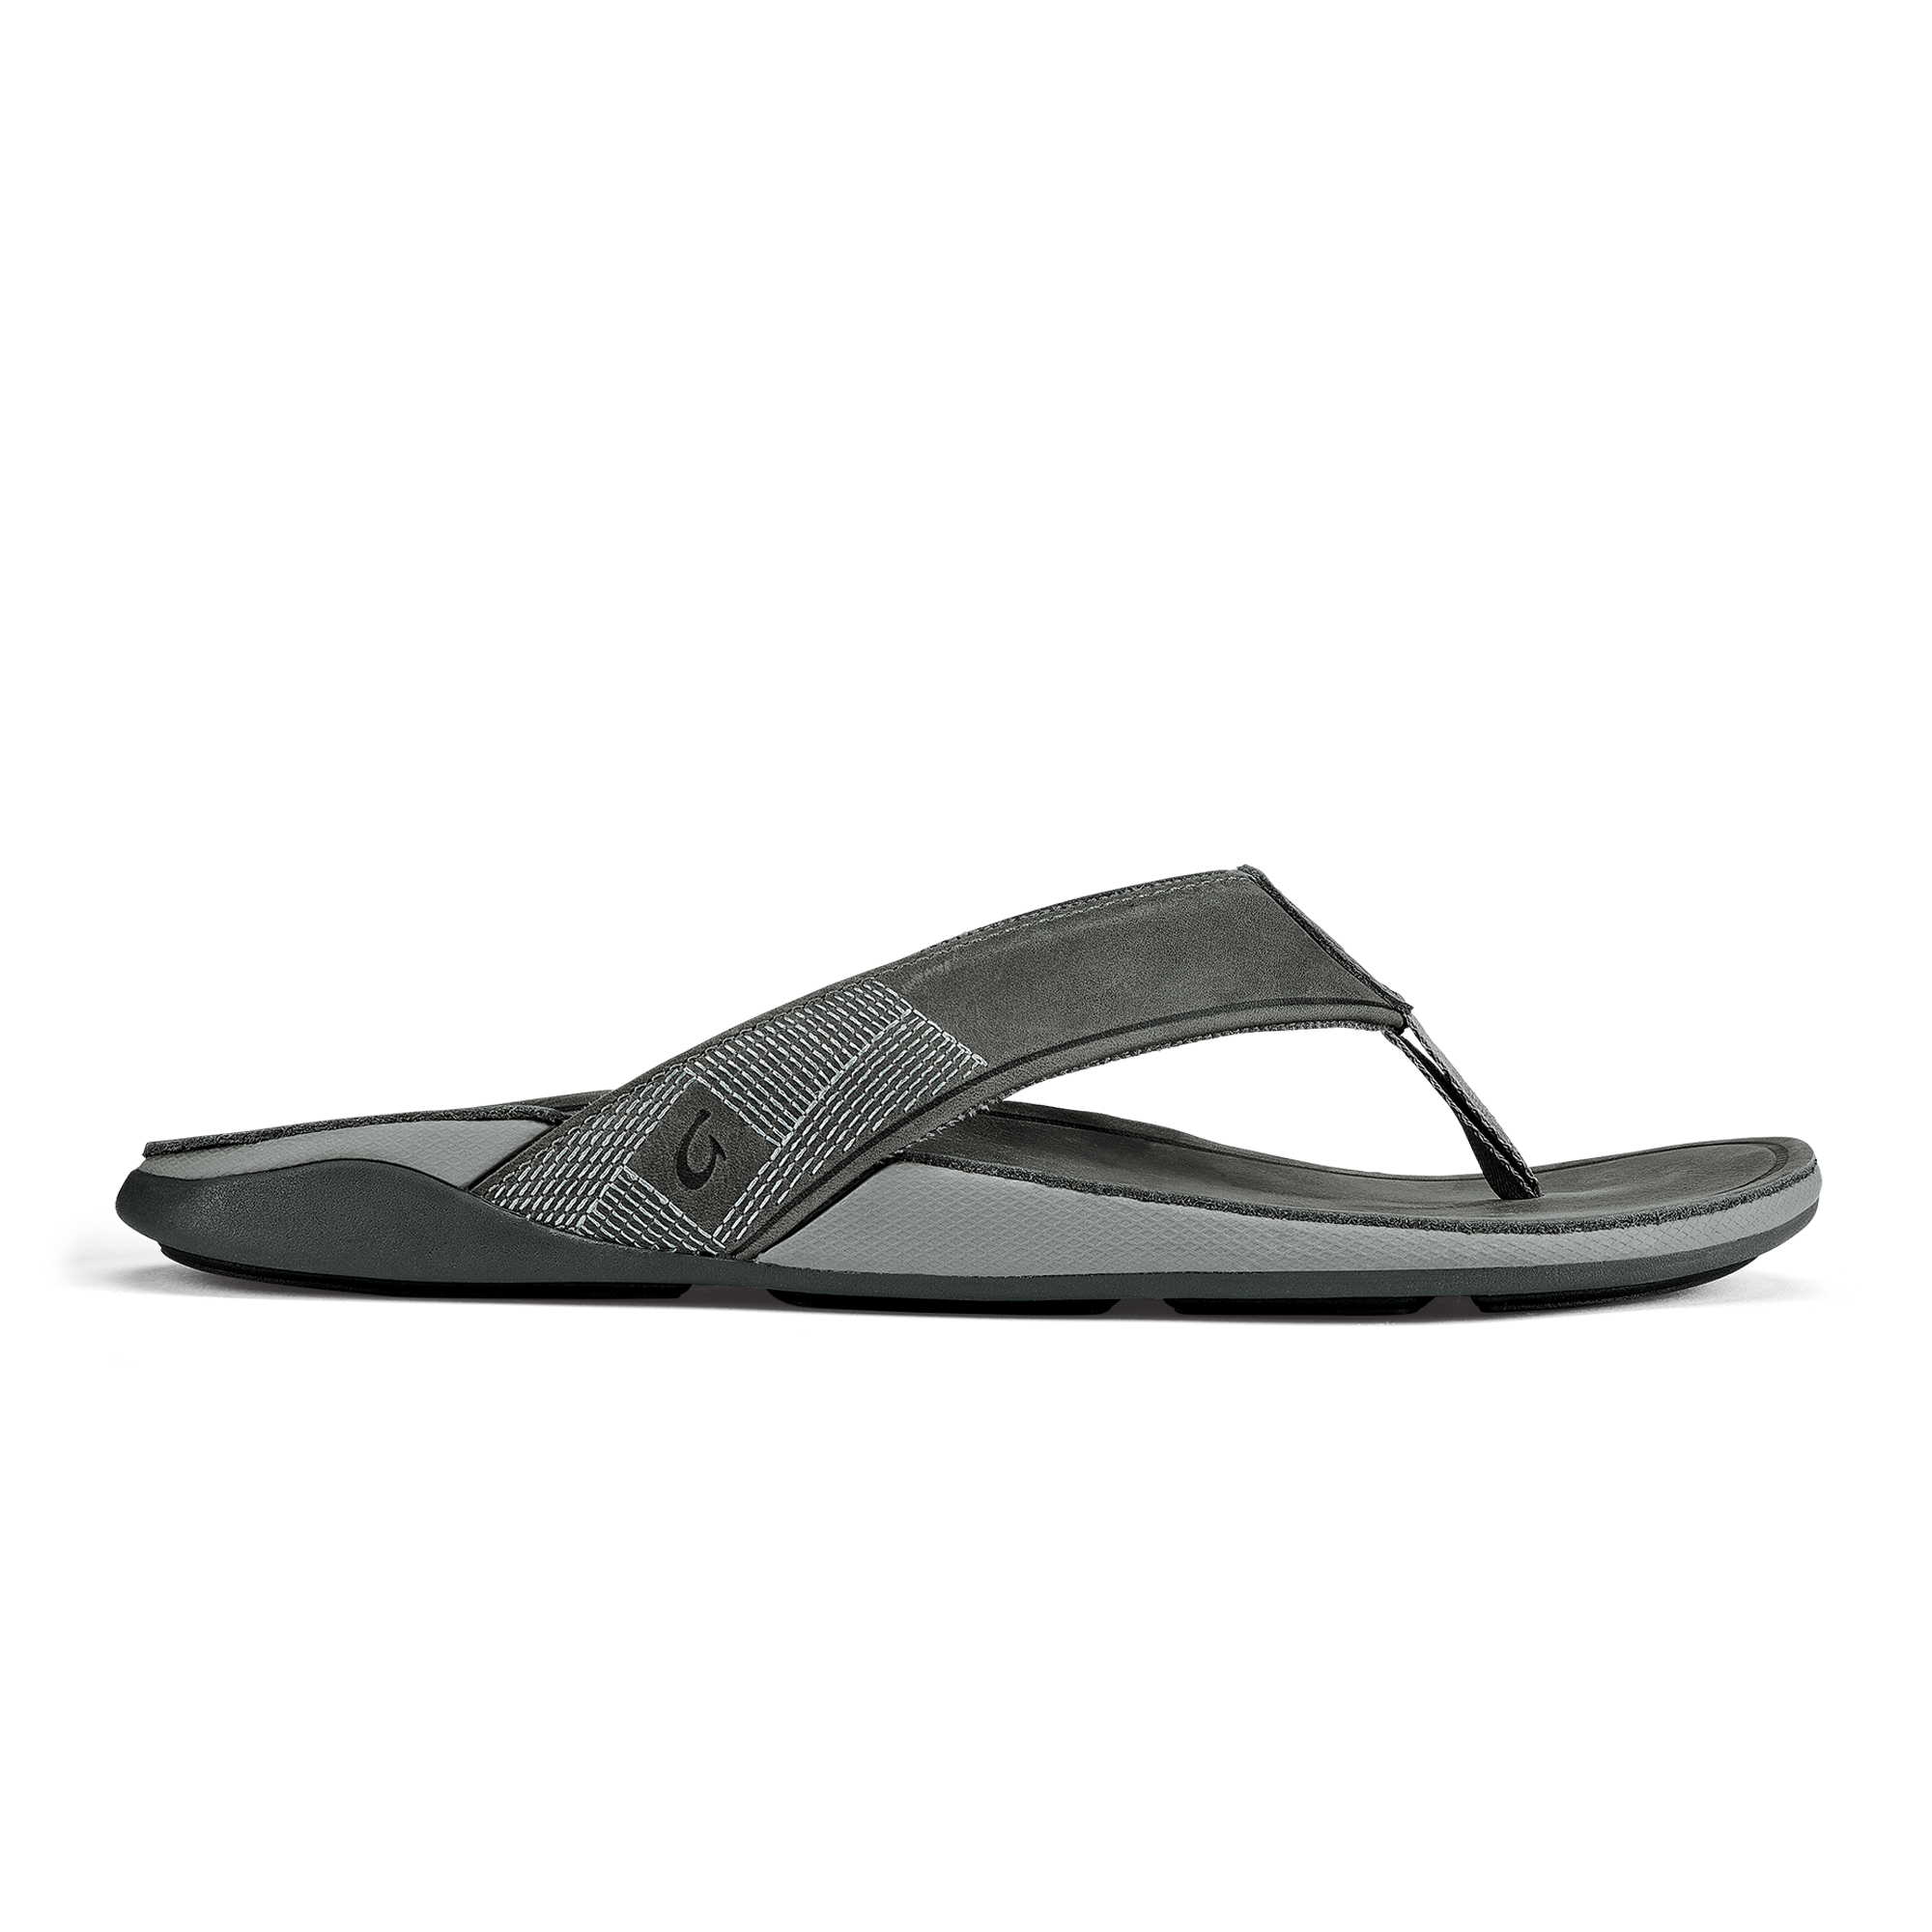 Tuahine Men's Waterproof Leather Beach Sandals - Stone | OluKai ...